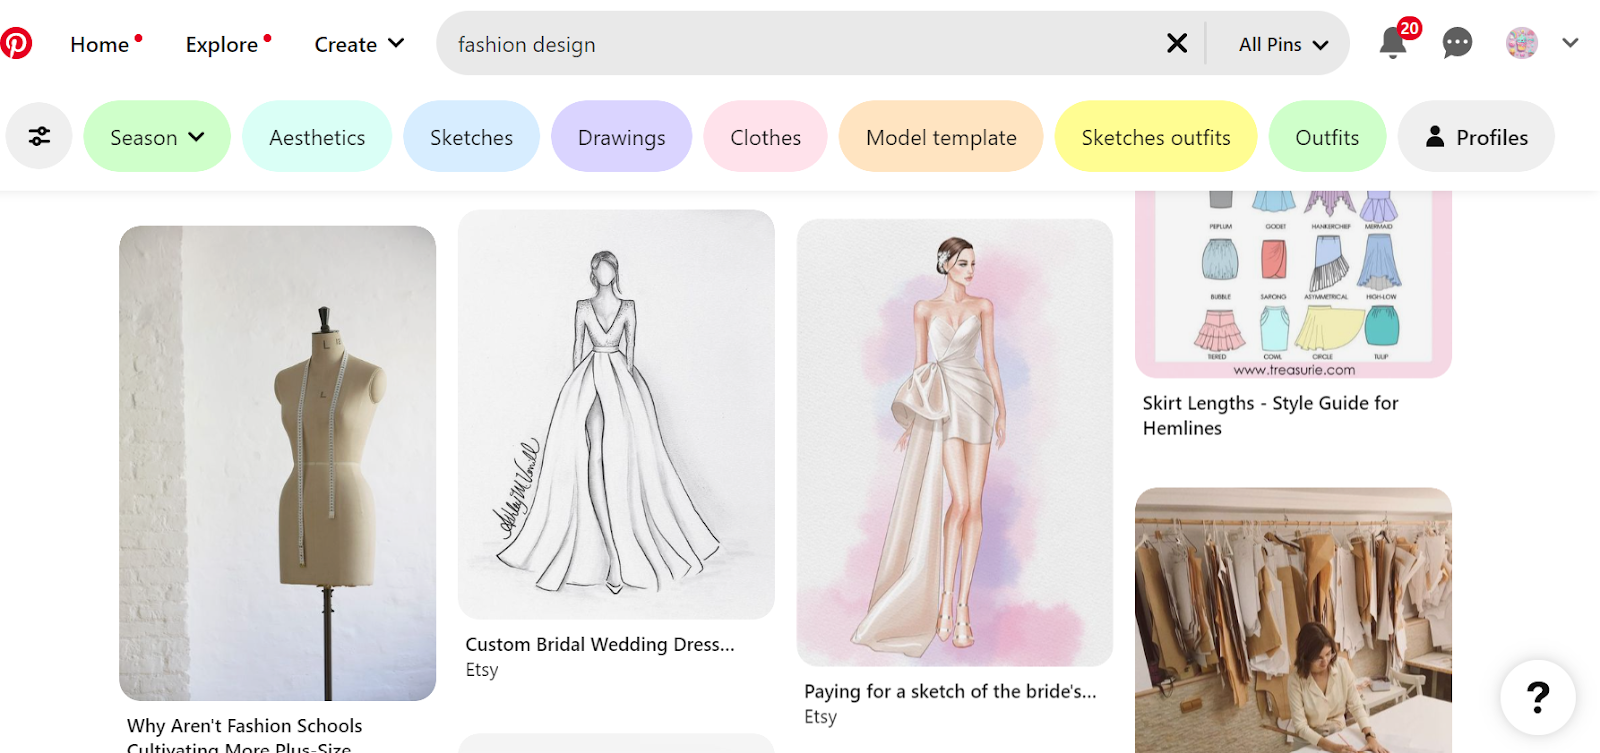 Screenshot of Pinterest displaying fashion design inspirations